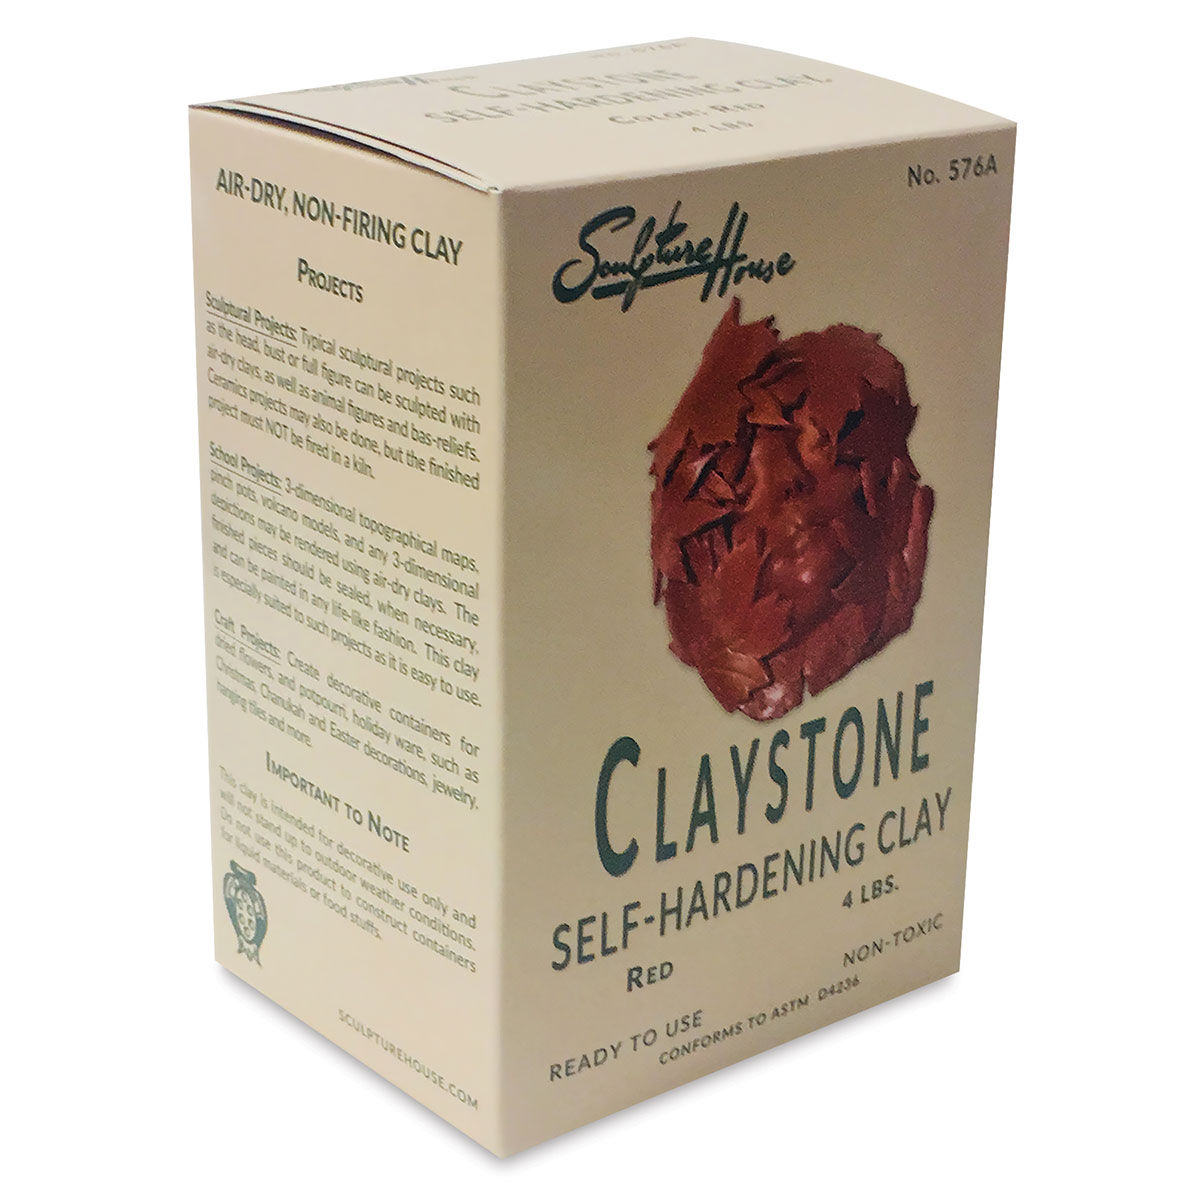 claystone self hardening clay